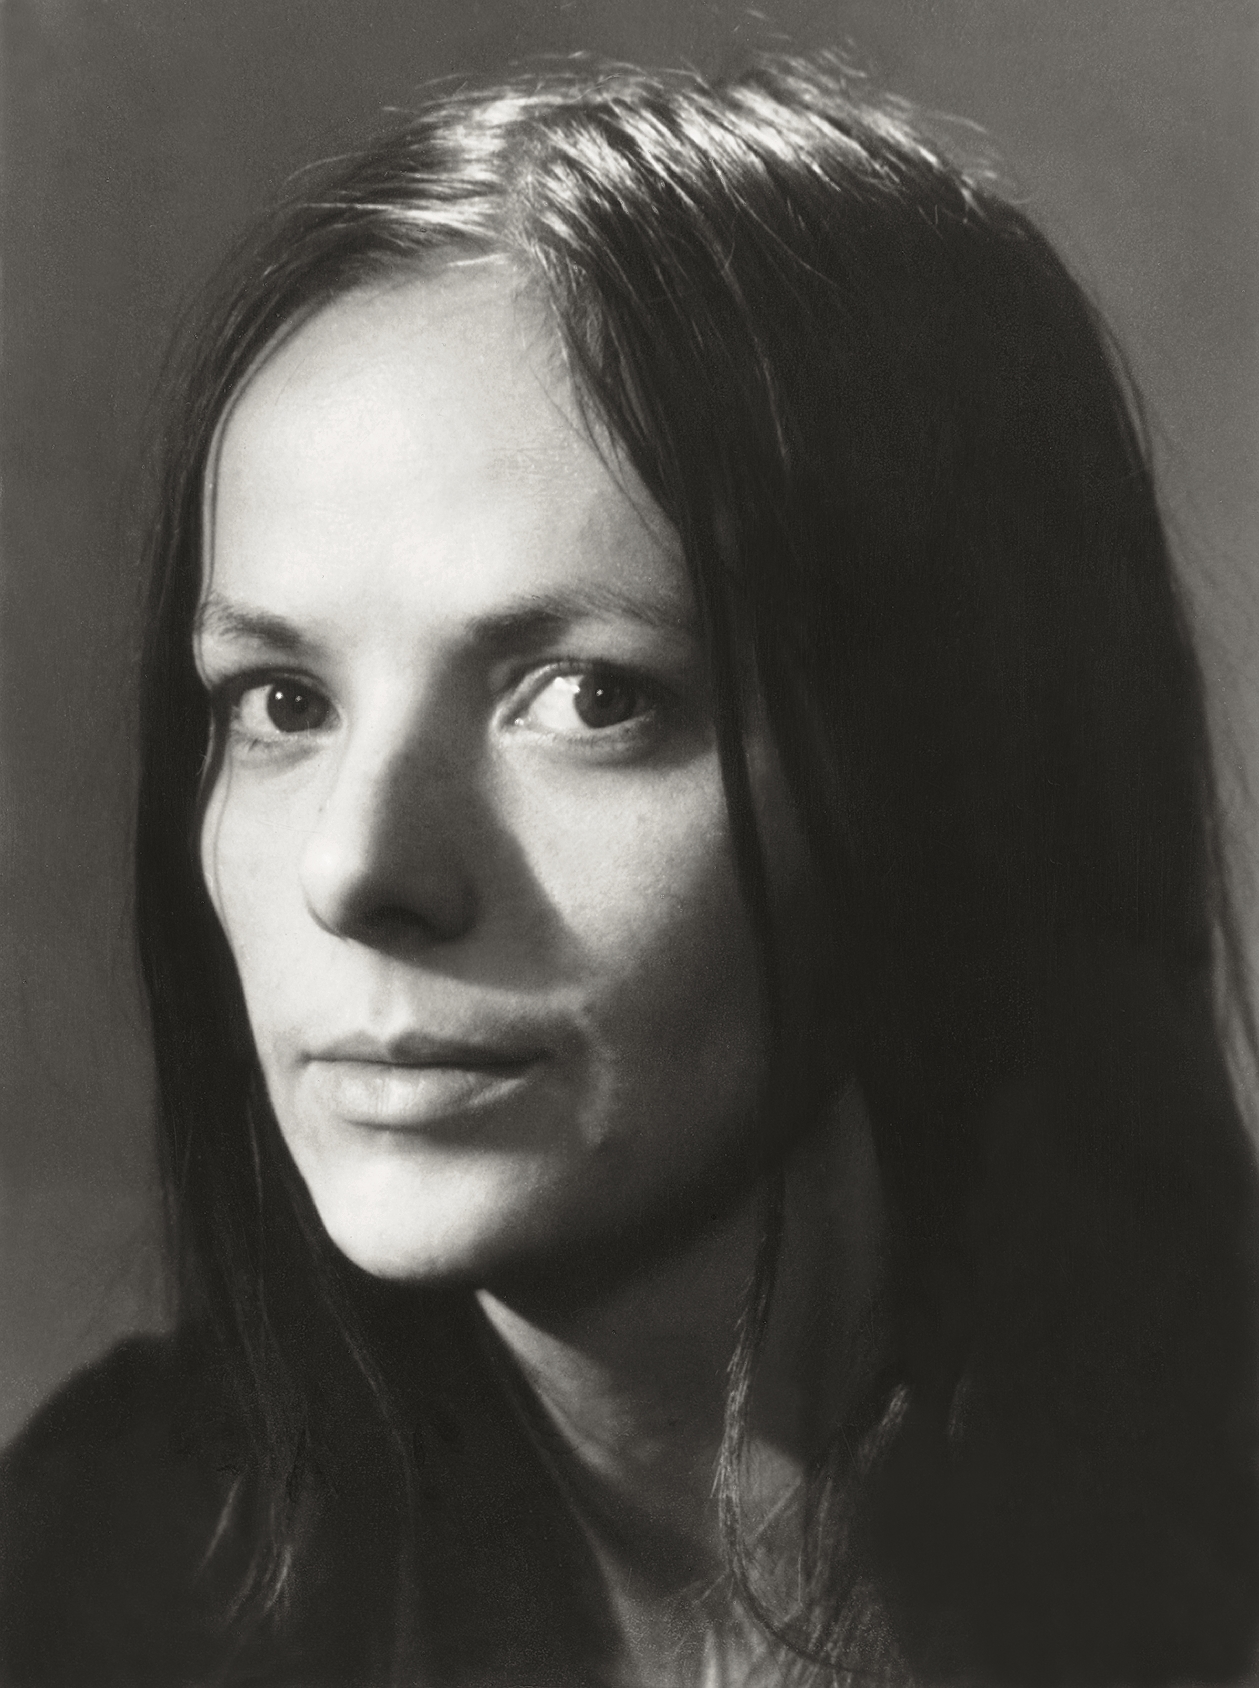 Margareta Renberg, 1974, photograher unknown (Norstedts Förlag)